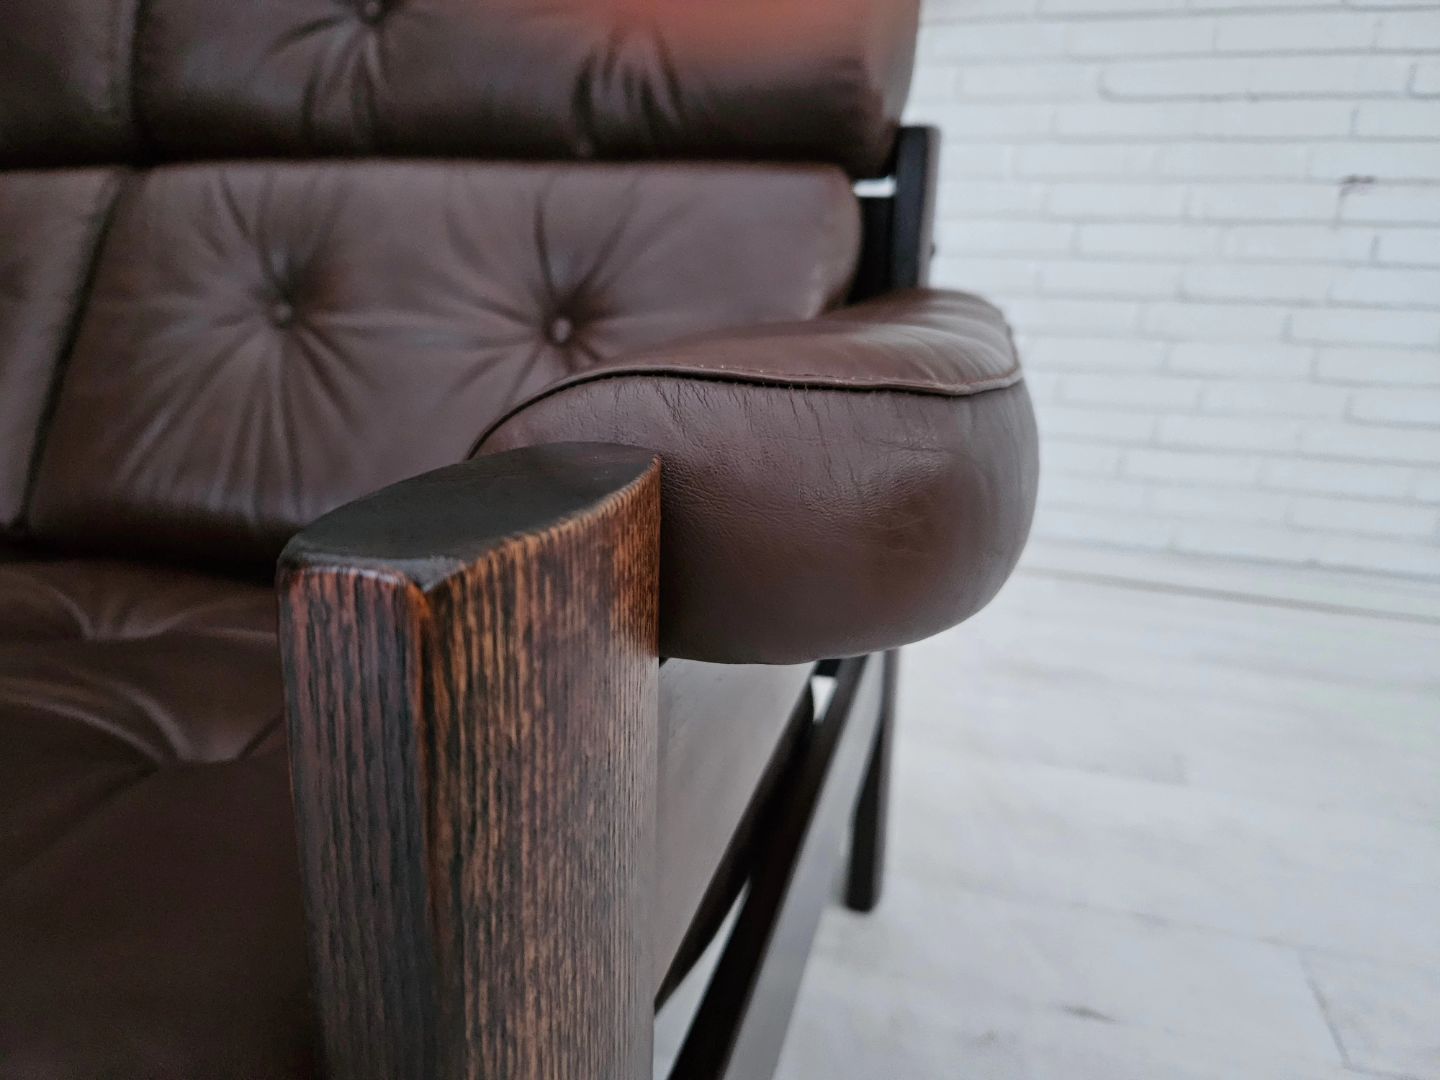 1970s, Danish 3 seater sofa, original good condition, leather, oak wood.